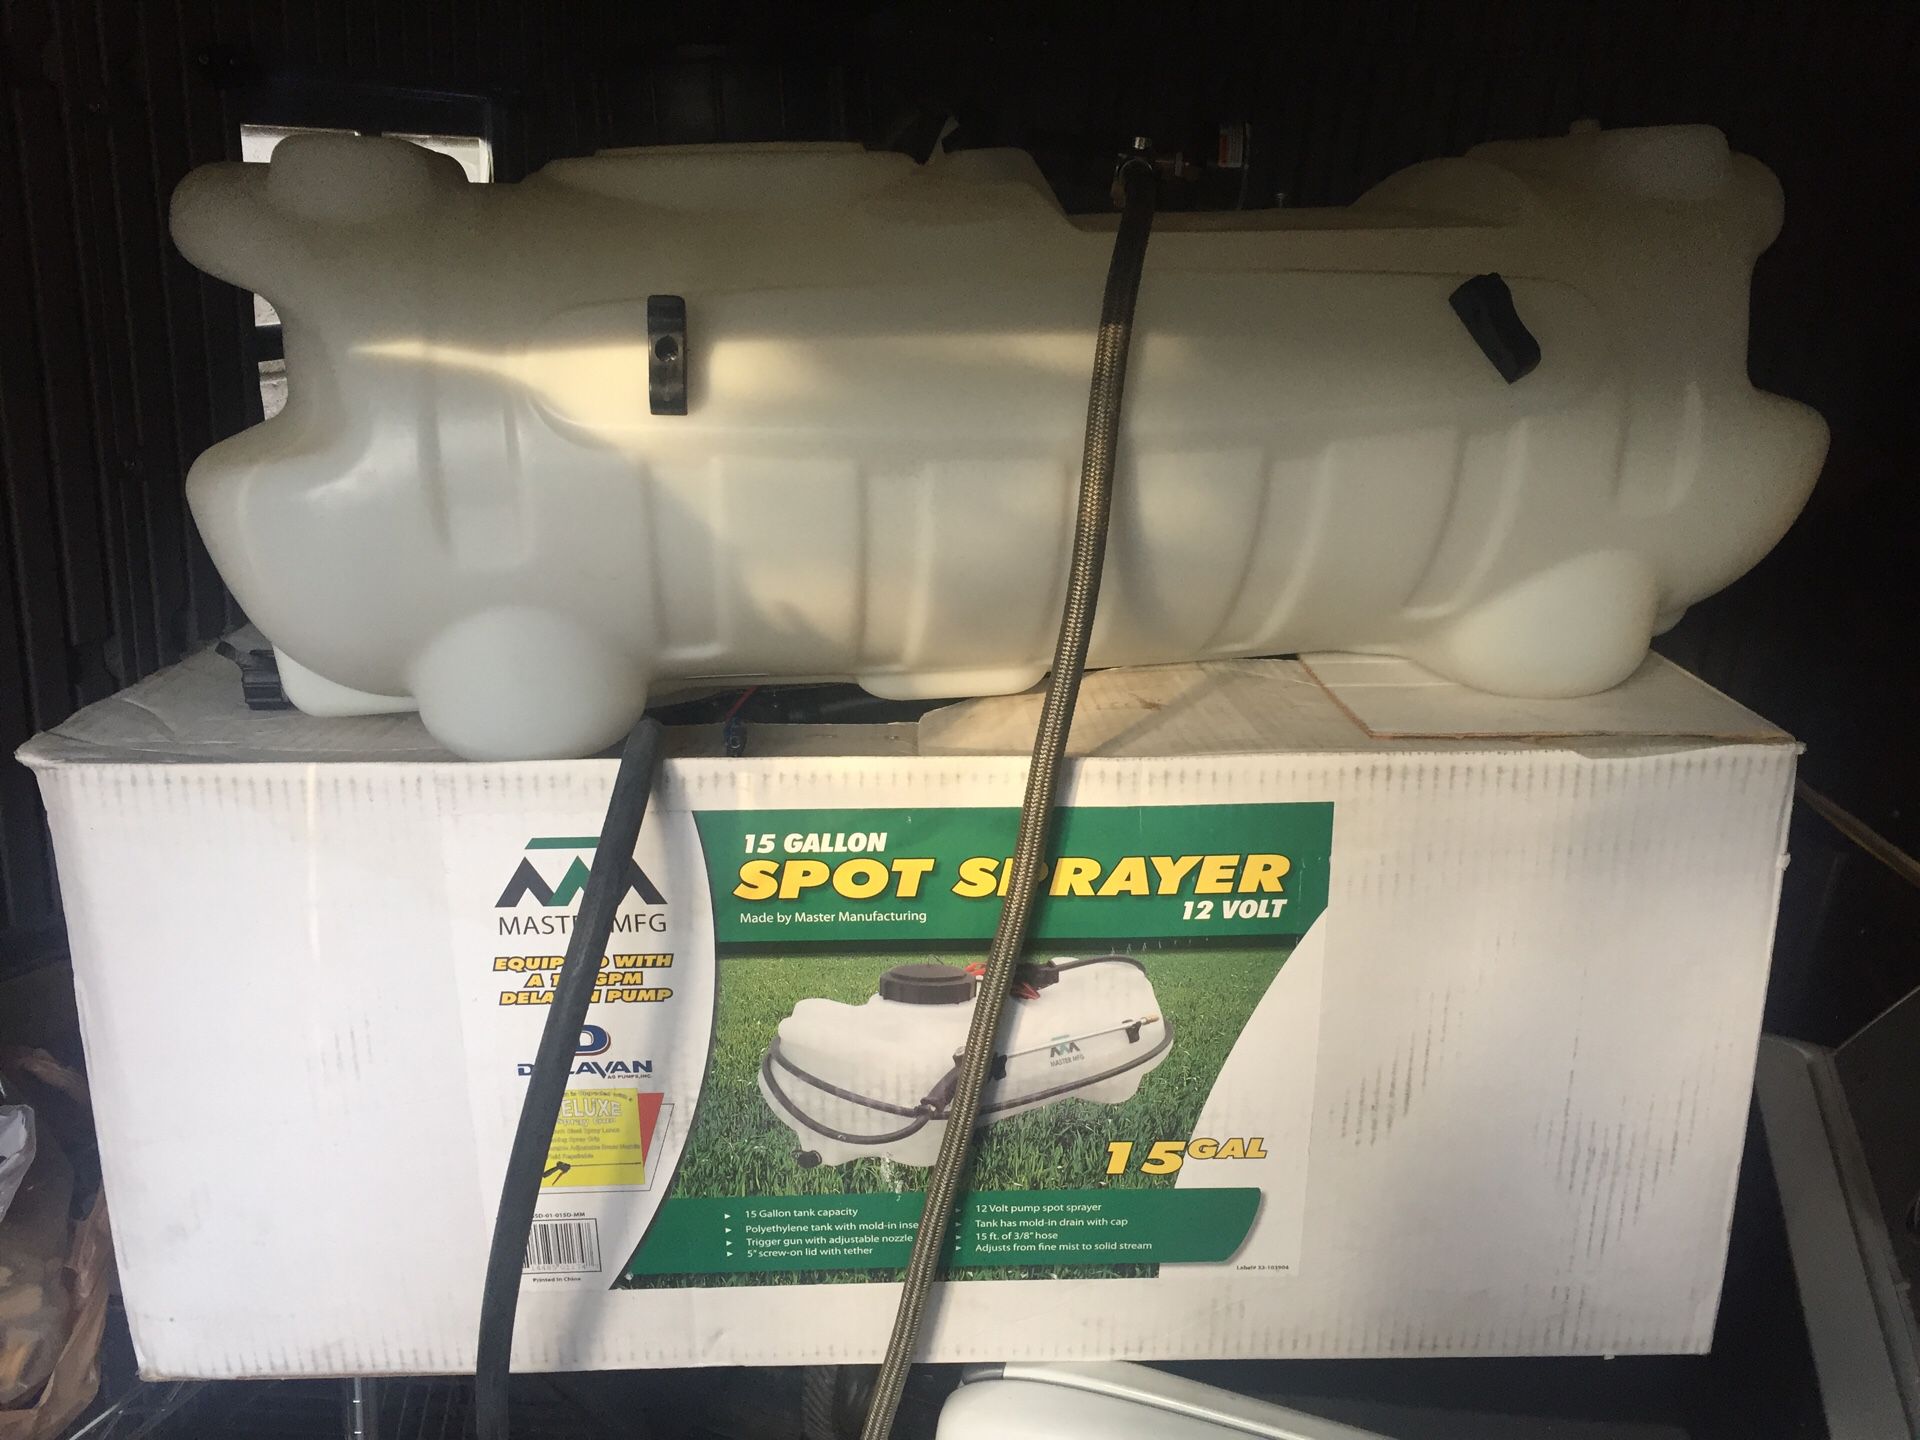 15 gallon spot sprayer